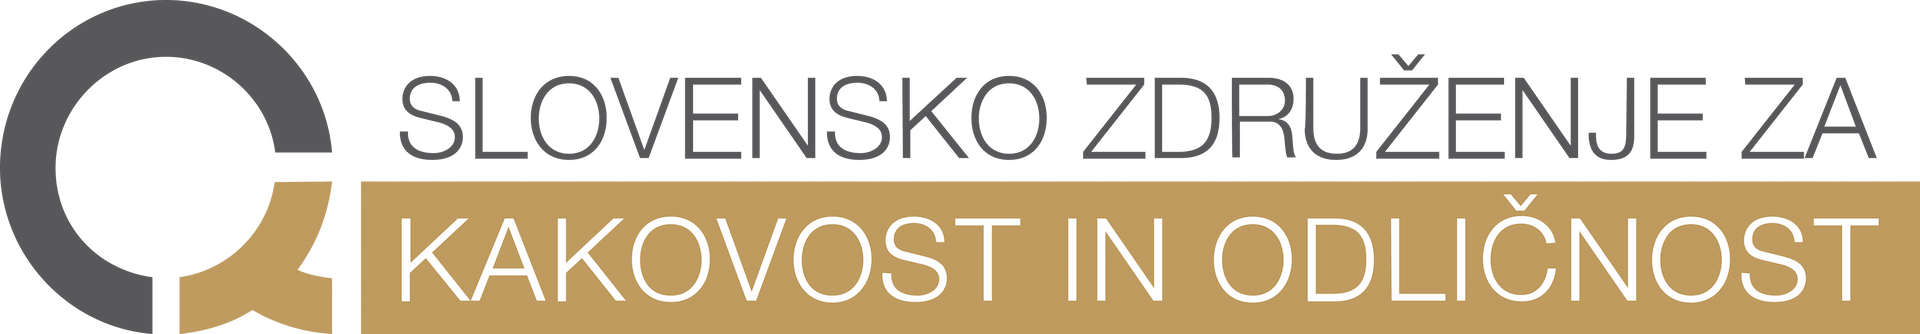 szko_logo_zlat 1.png